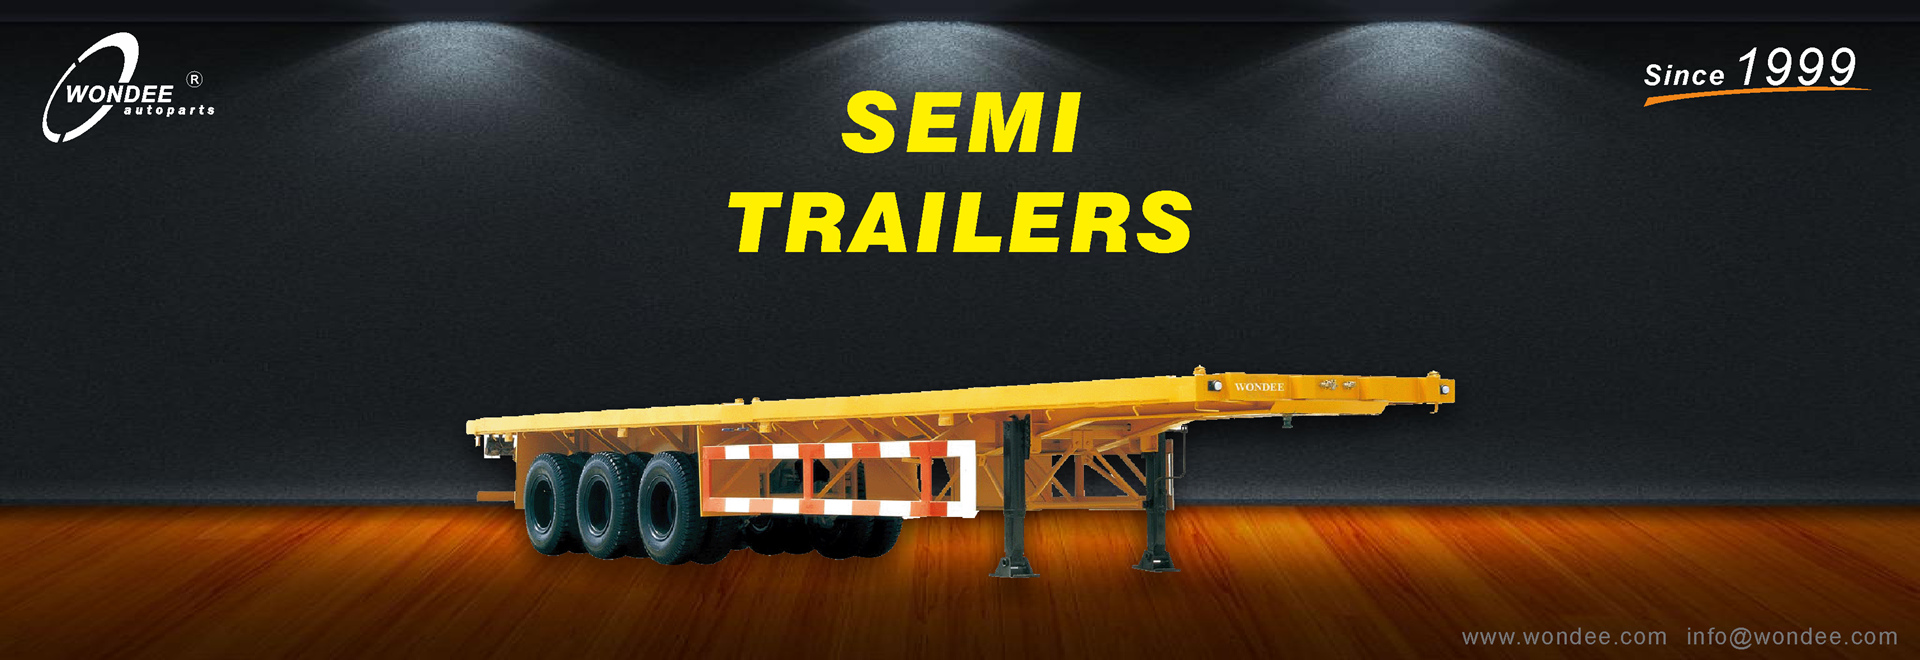 Wondee semi trailers